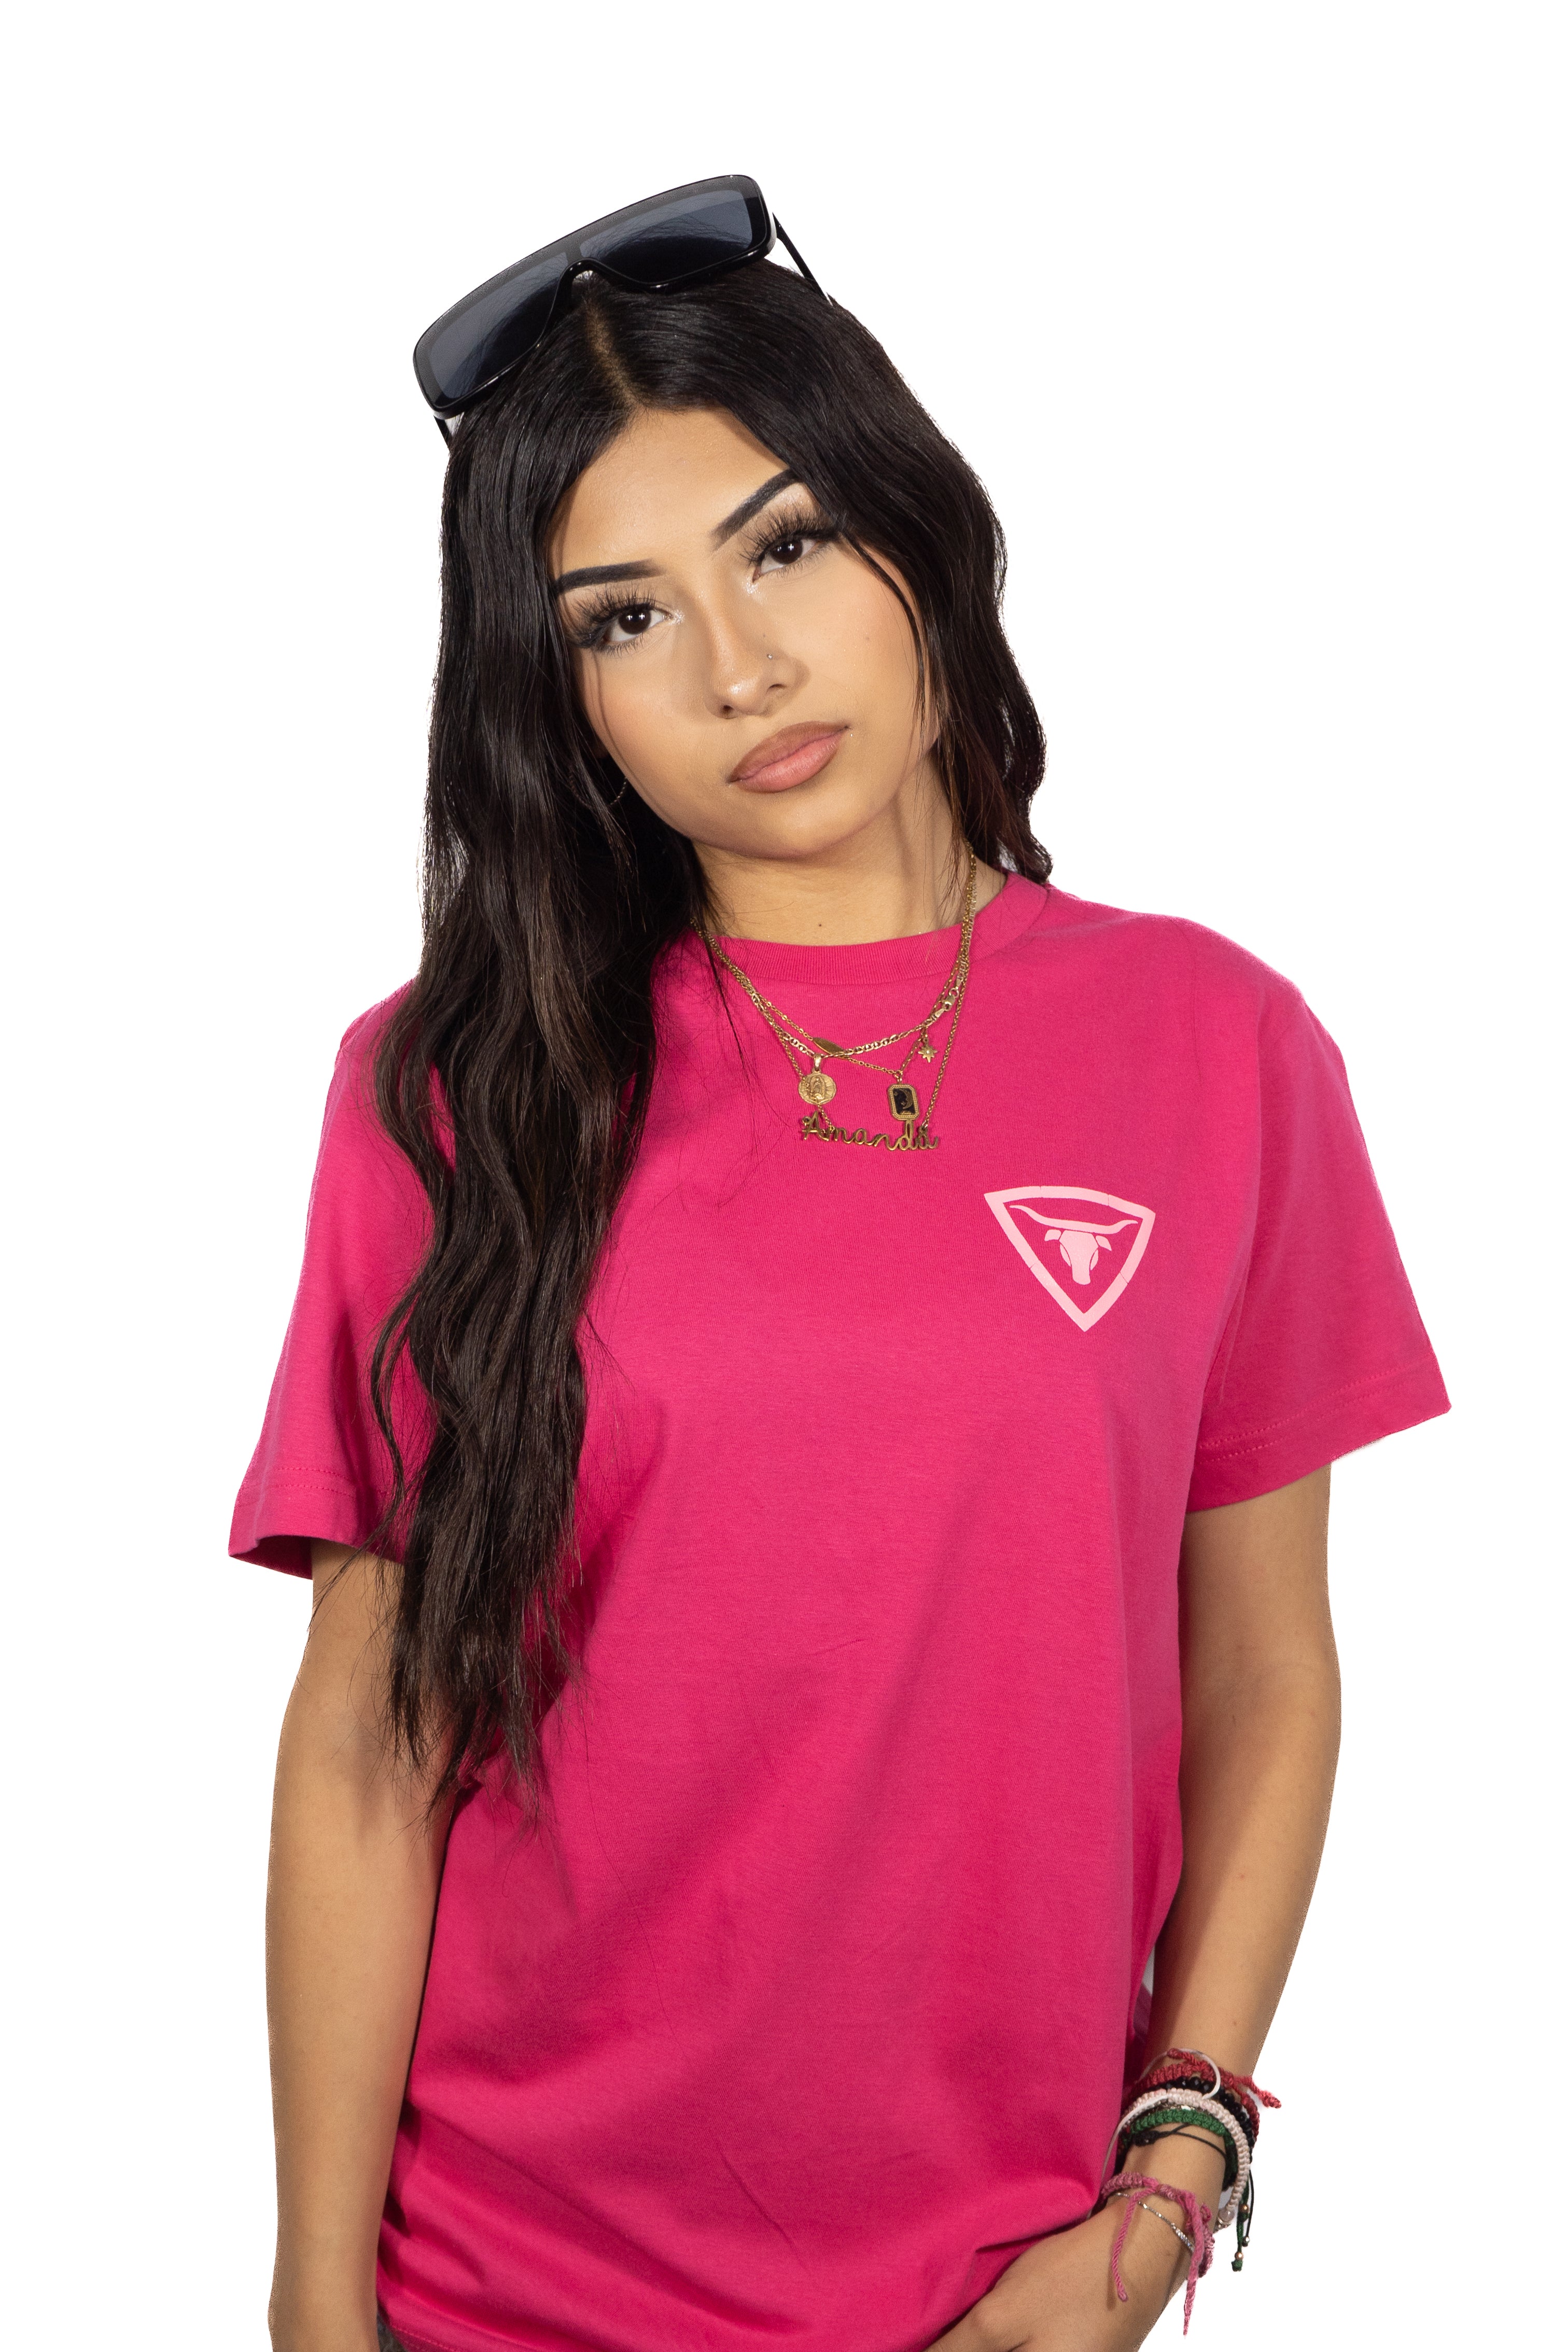 Puro Desmadre “Hot Pink” Shirt - Puro Desmadre Brand